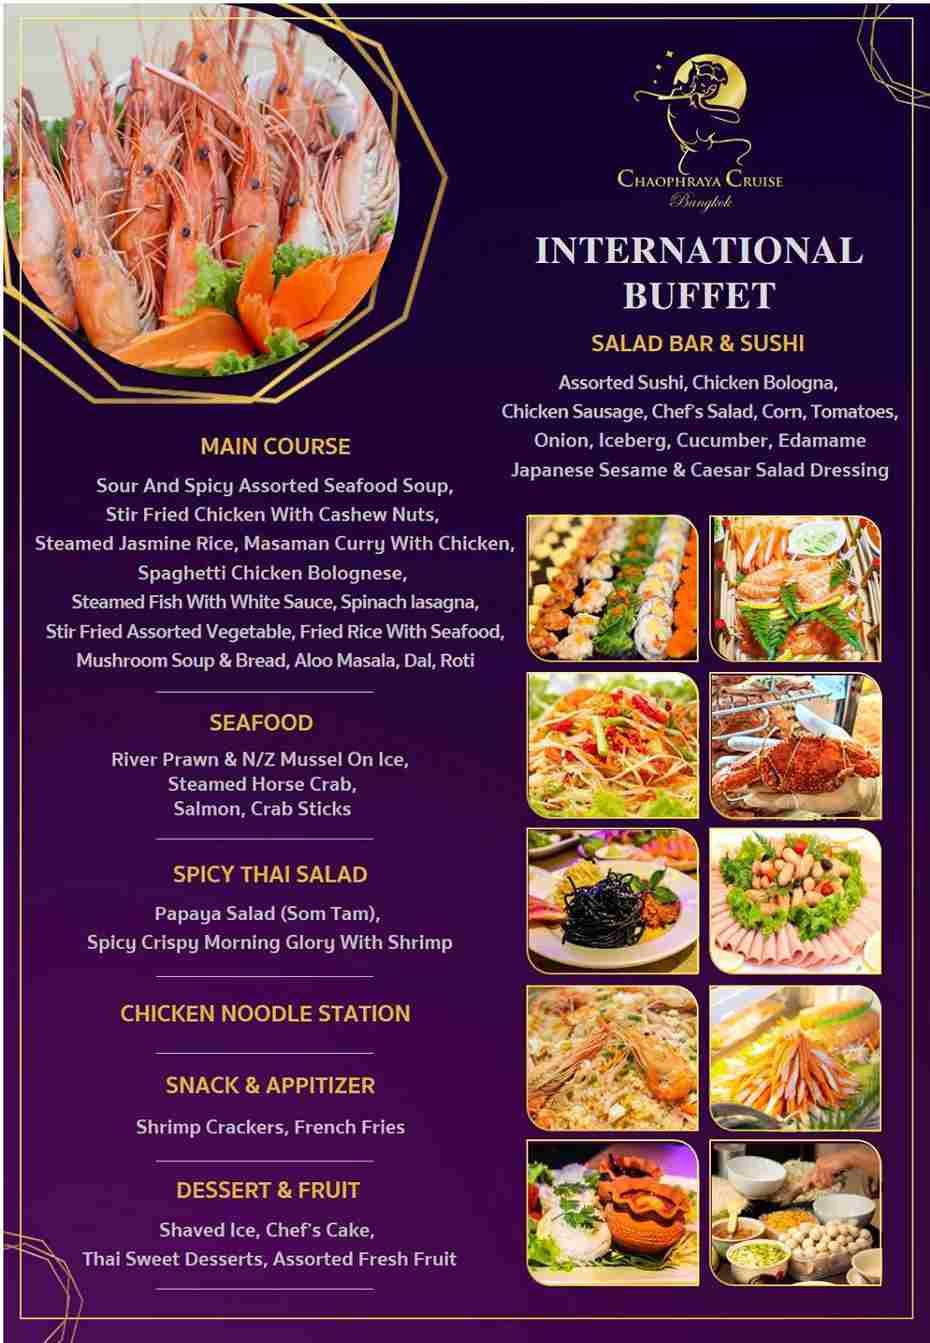 Chaophraya Cruise food menu list